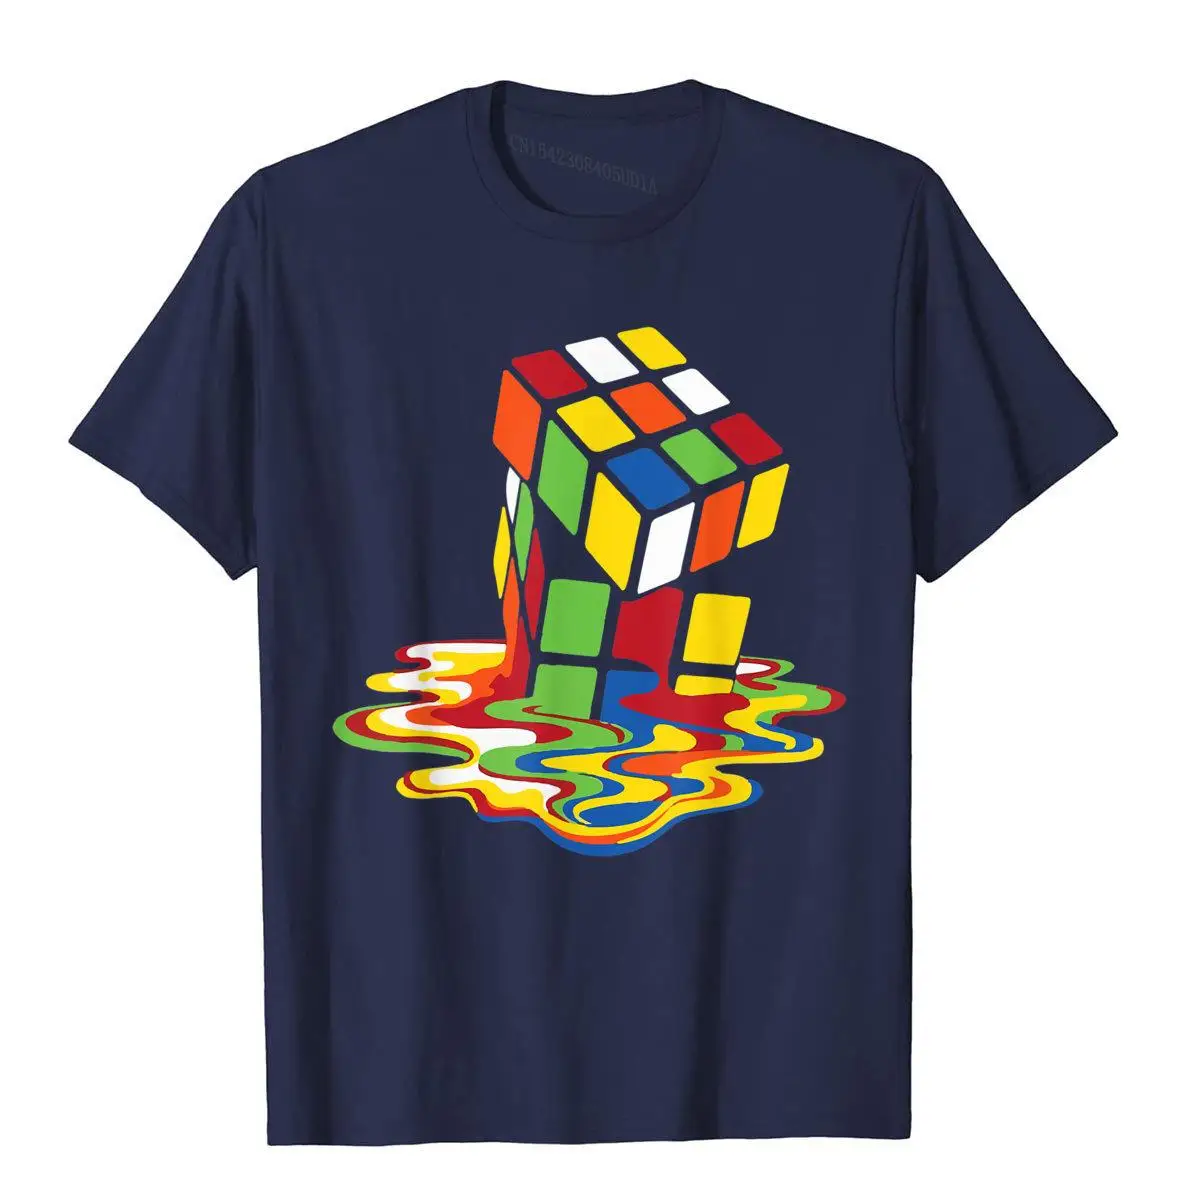 Awesome Graphic Melting Rubik Rubix Rubics Cube Funny Tee T-Shirt__B6016navy